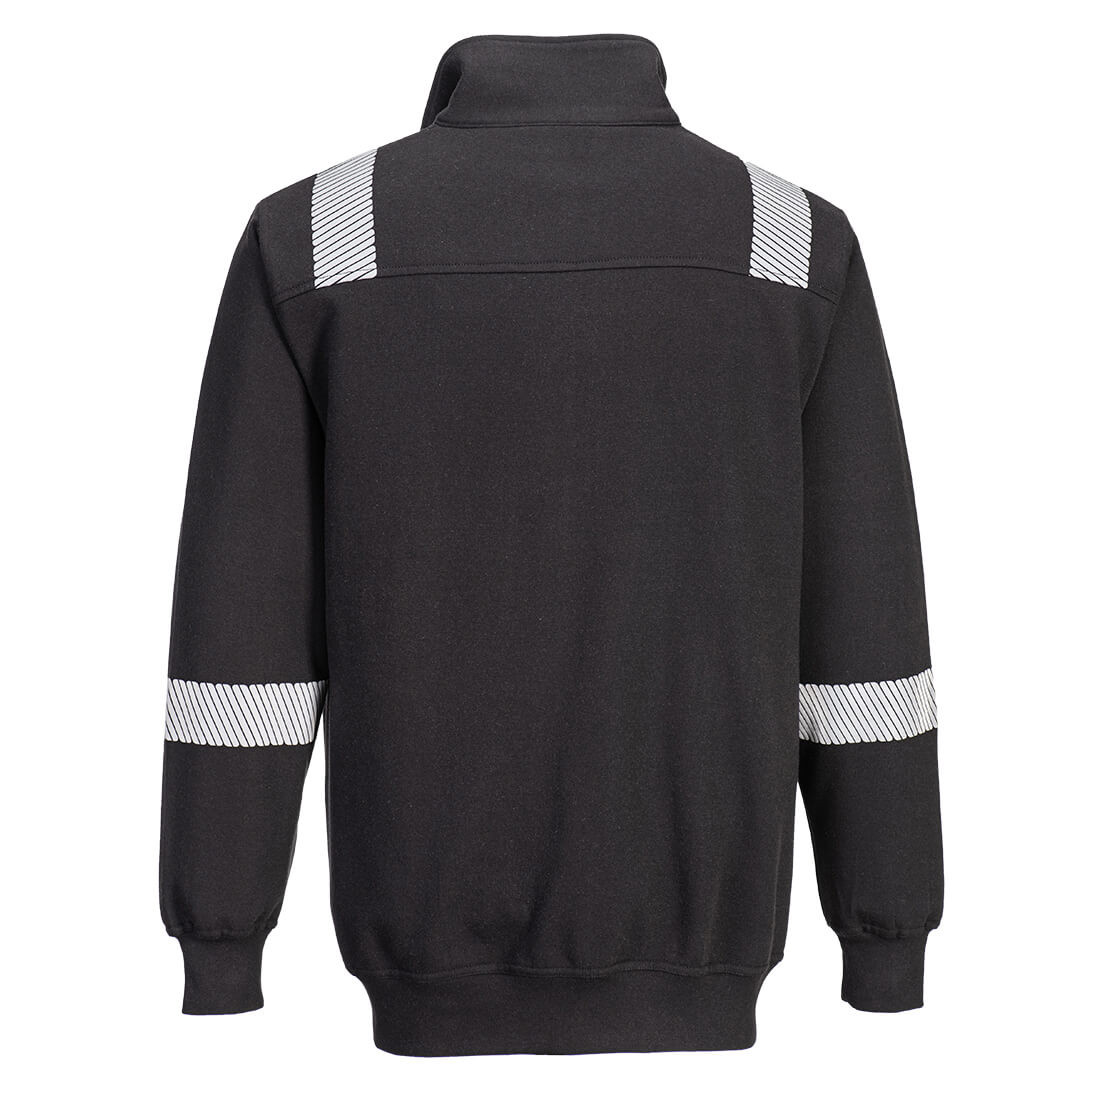 WX3 Flame Resistant Sweatshirt - Safetywear